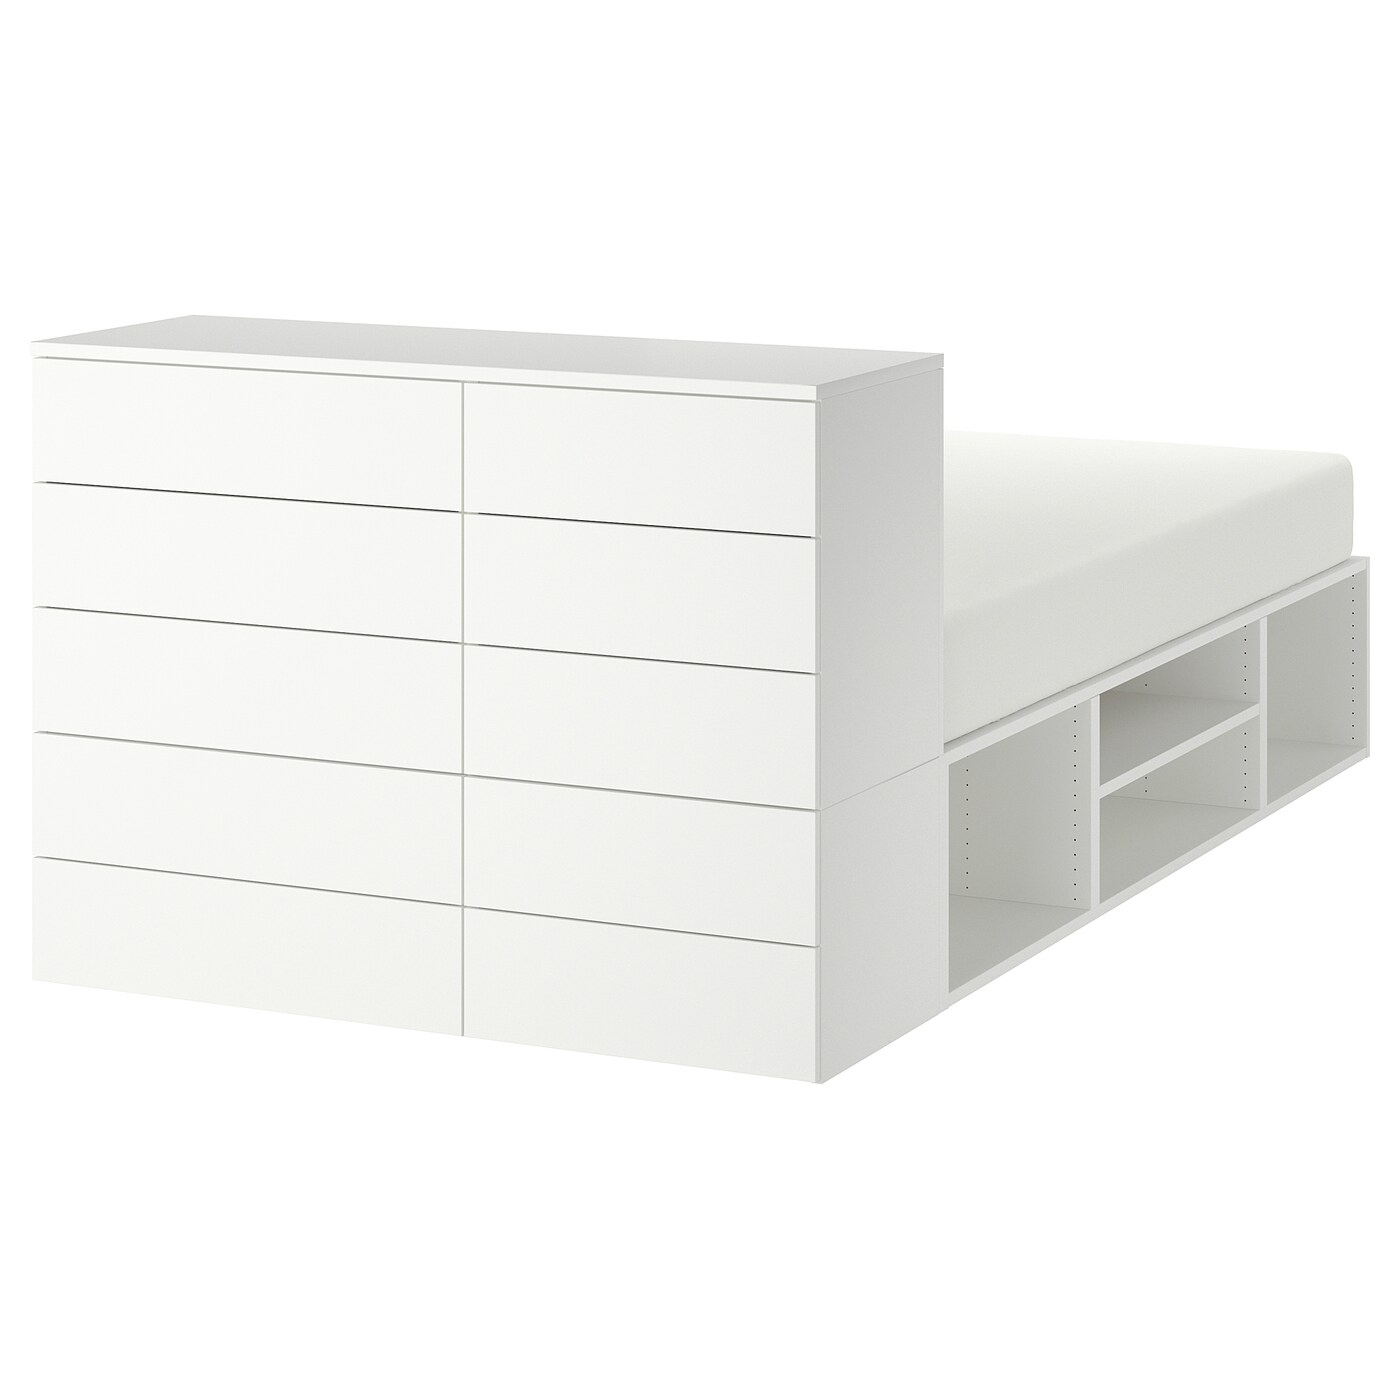 Каркас кровати с 10 ящиками - IKEA PLATSA, 200х140 см, белый, ПЛАТСА ИКЕА